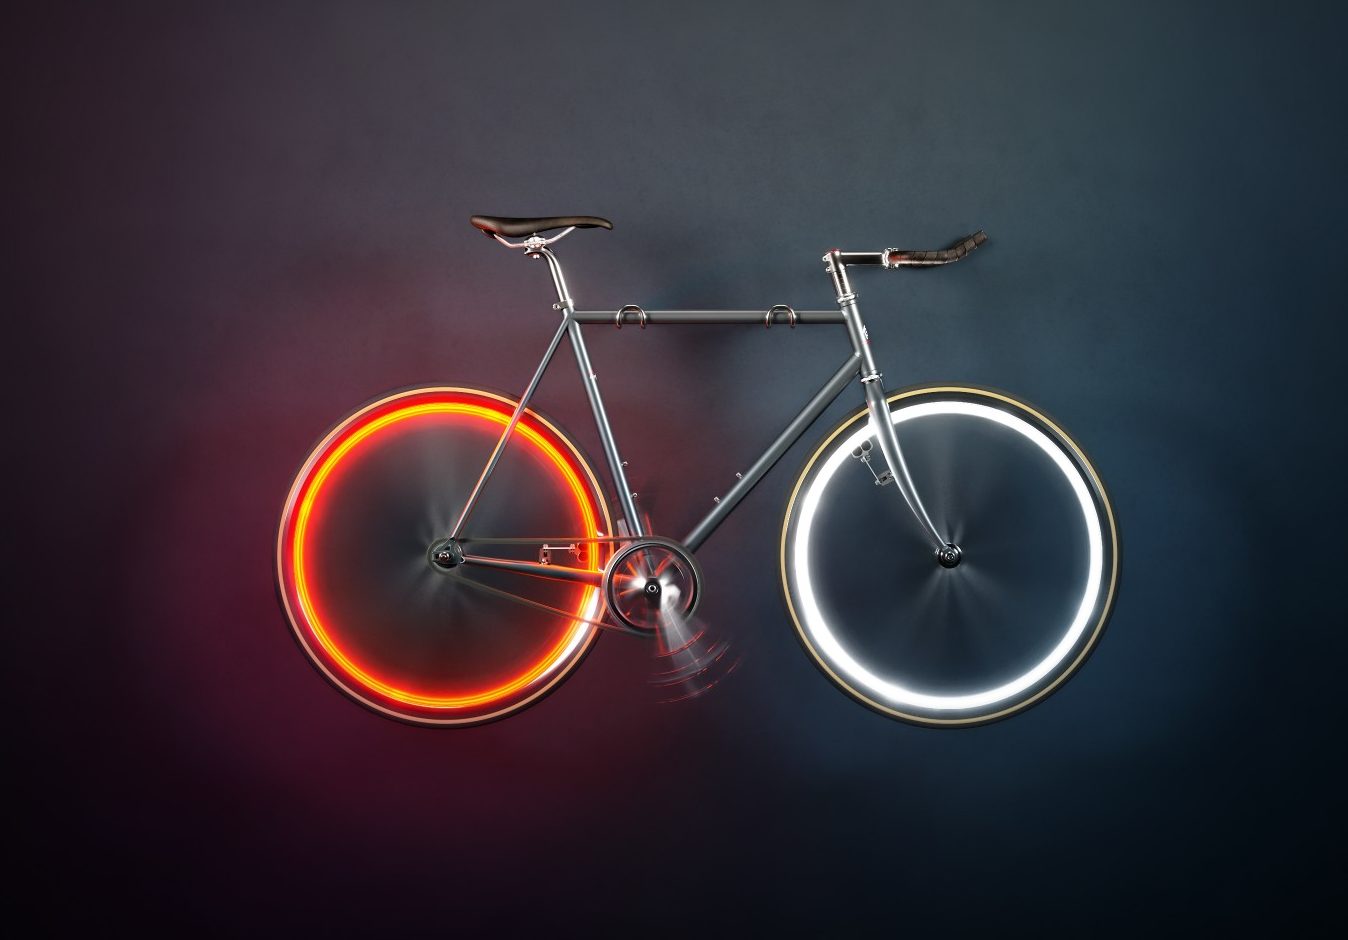 bicycle spoke lights